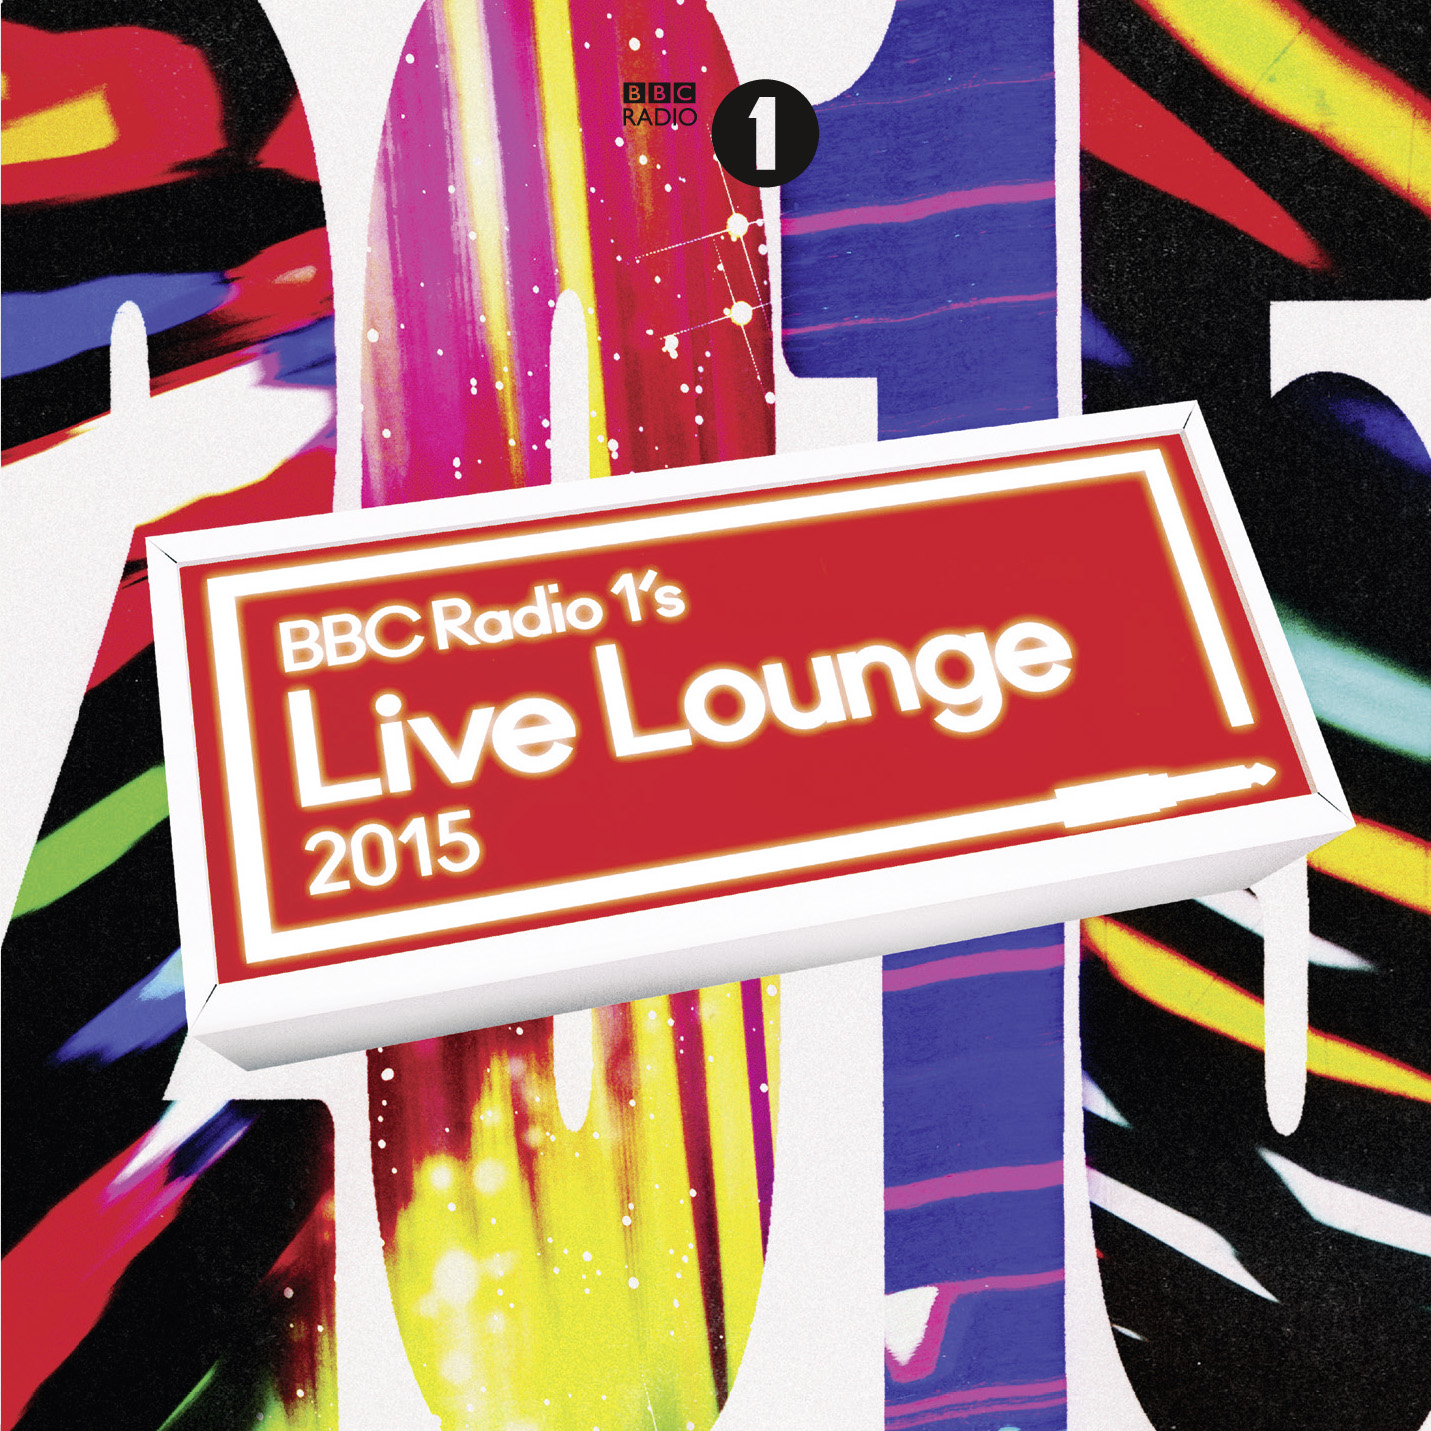 BBC Radio 1’s live lounge 2015 track listing revealed